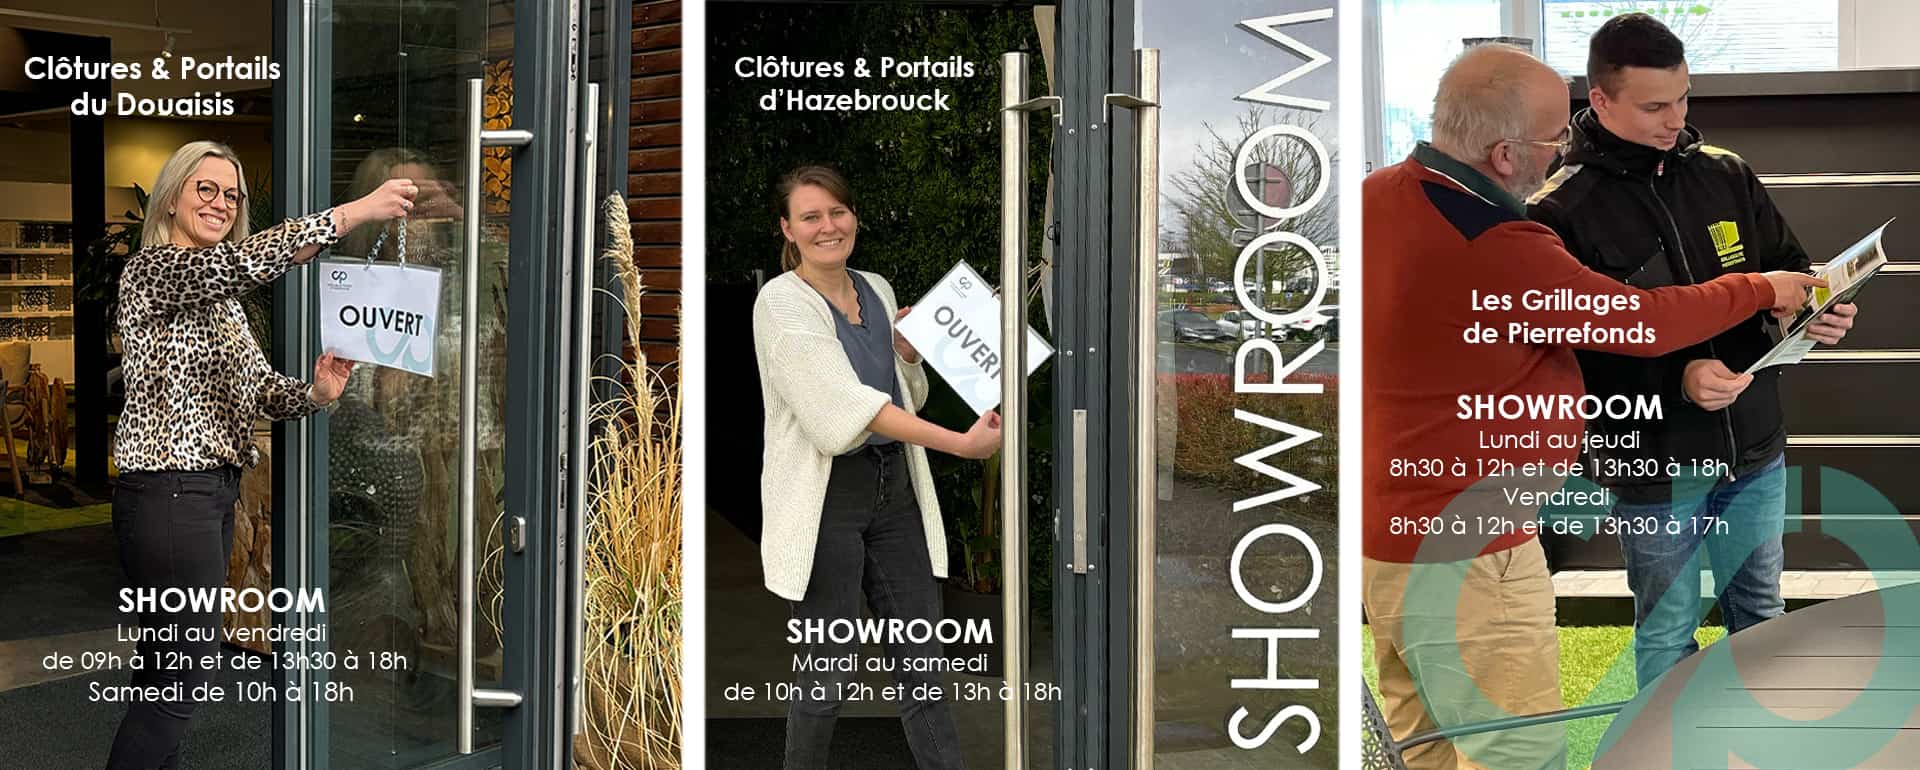 ouverture-showroom-site-web-2 (1)